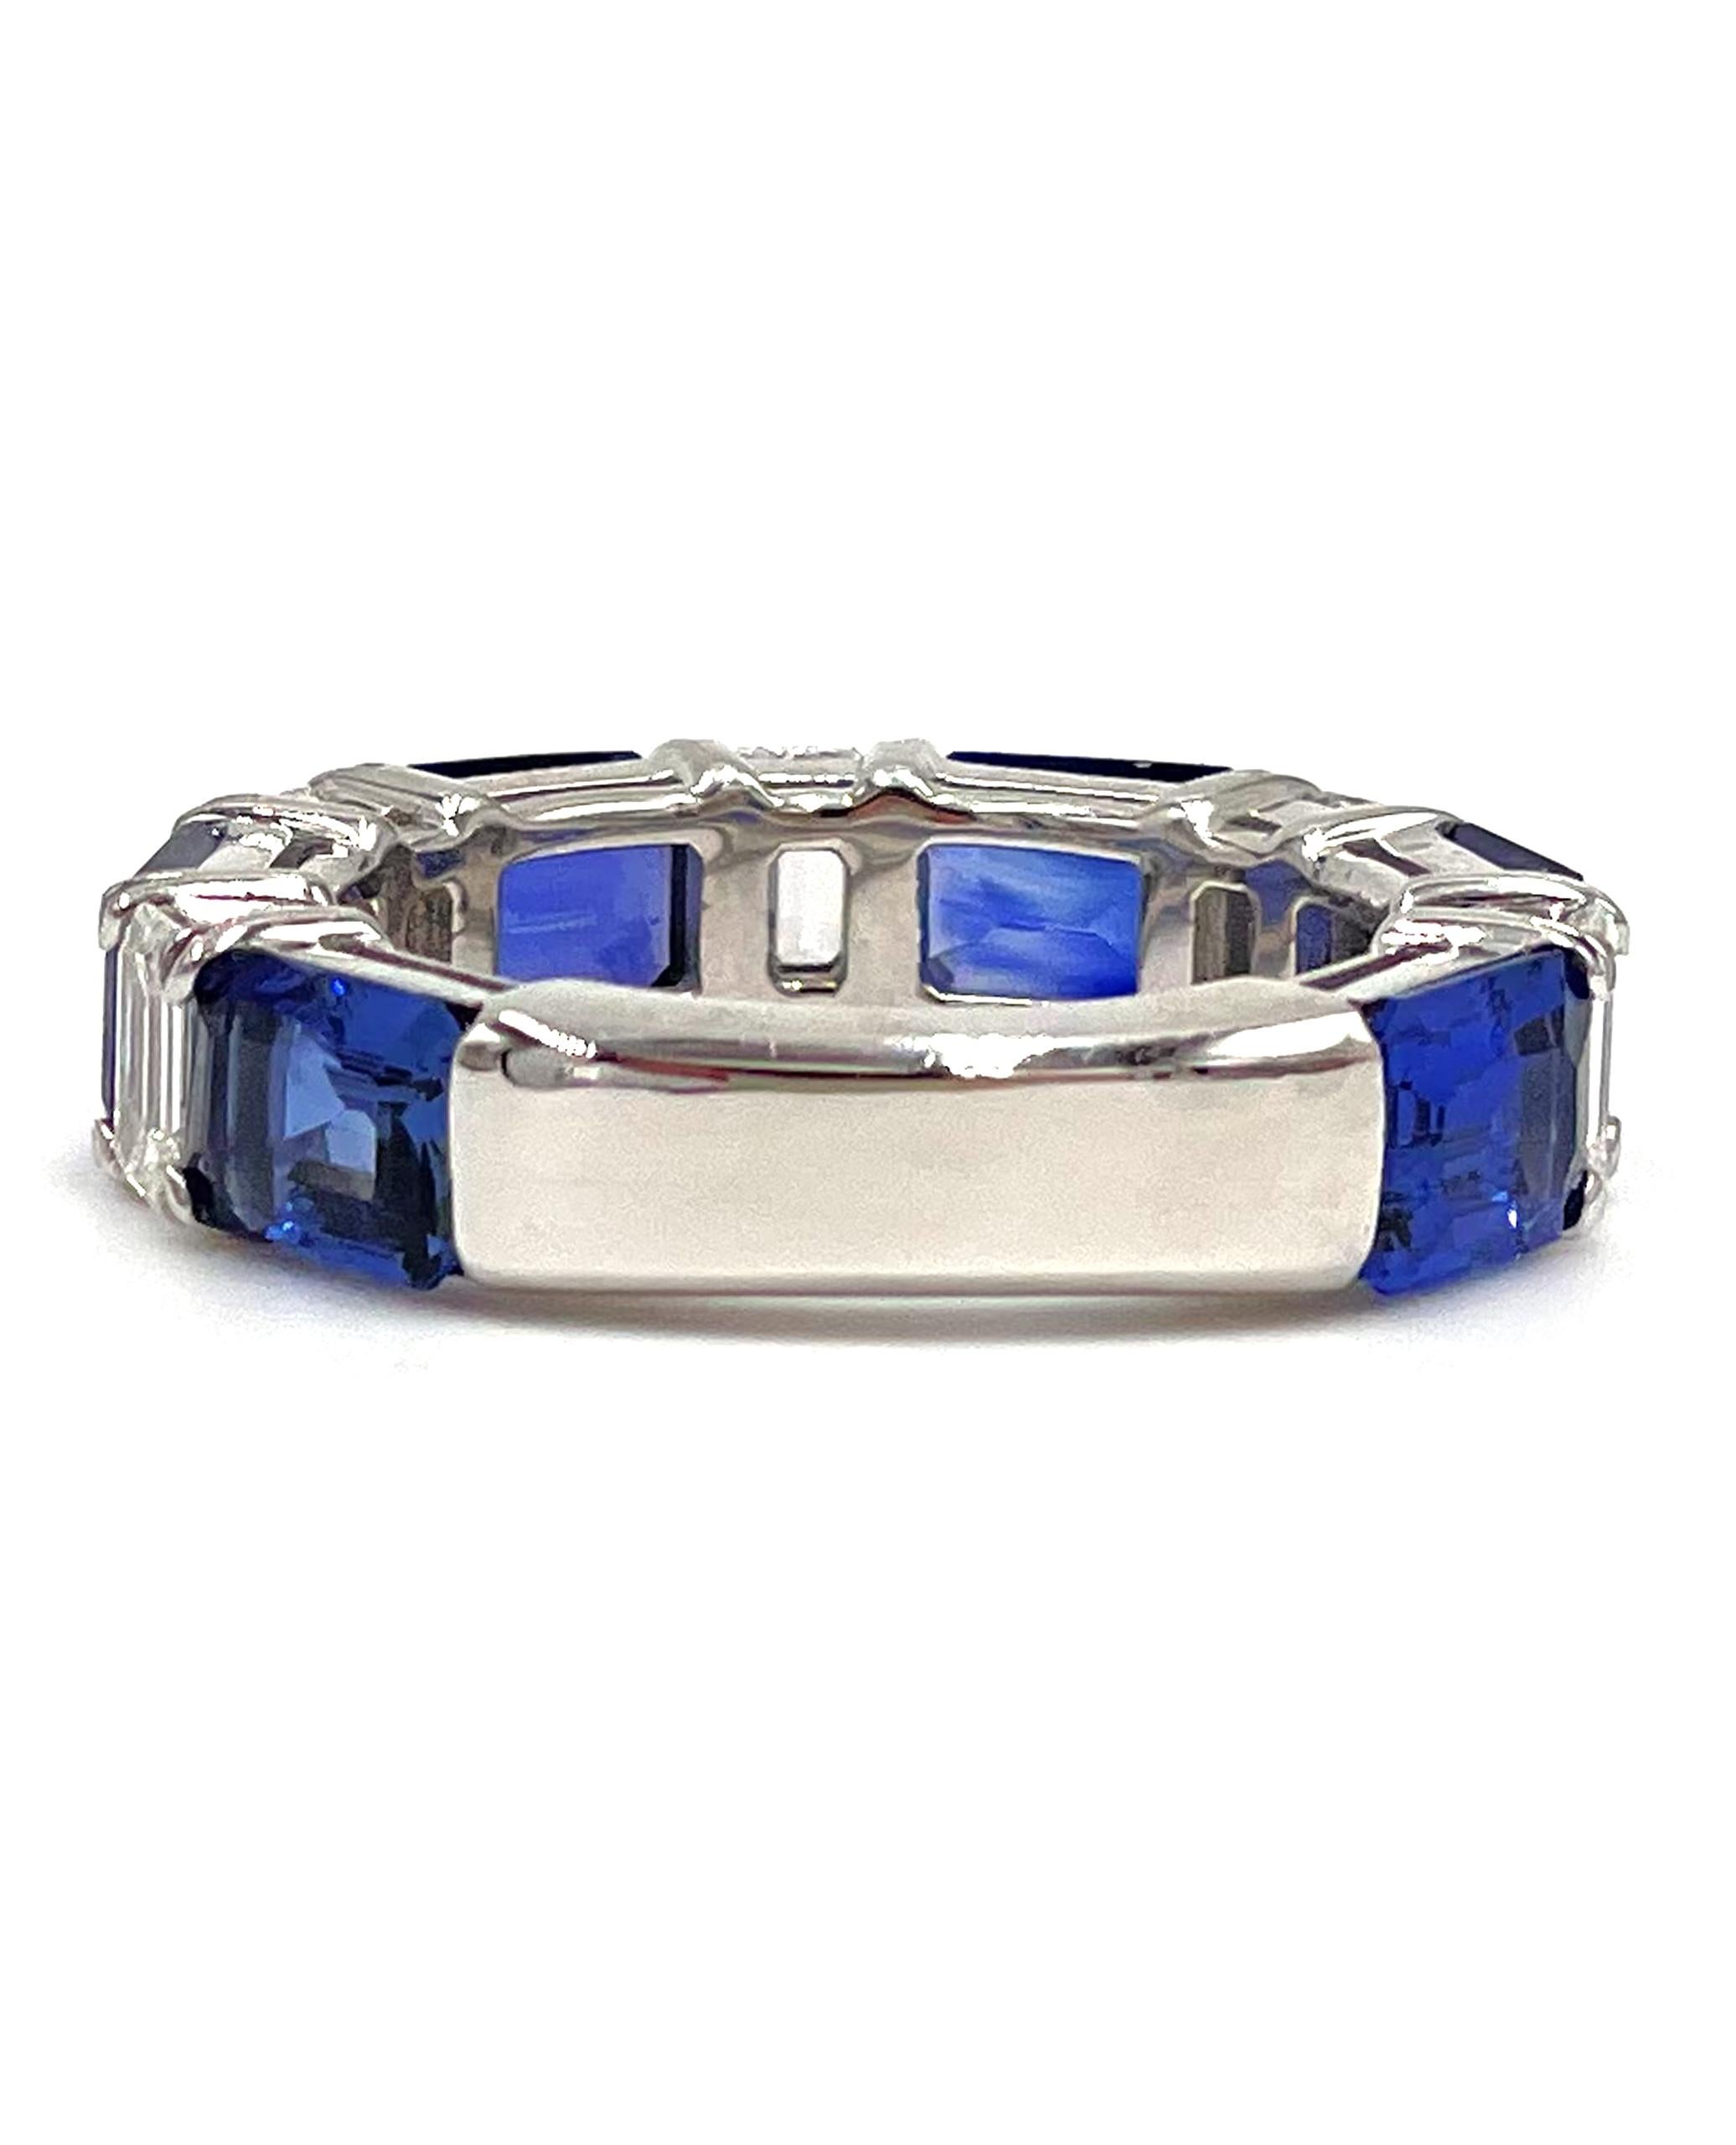 Contemporary 18k White Gold Sapphire and Diamond Emerald Cut Ring